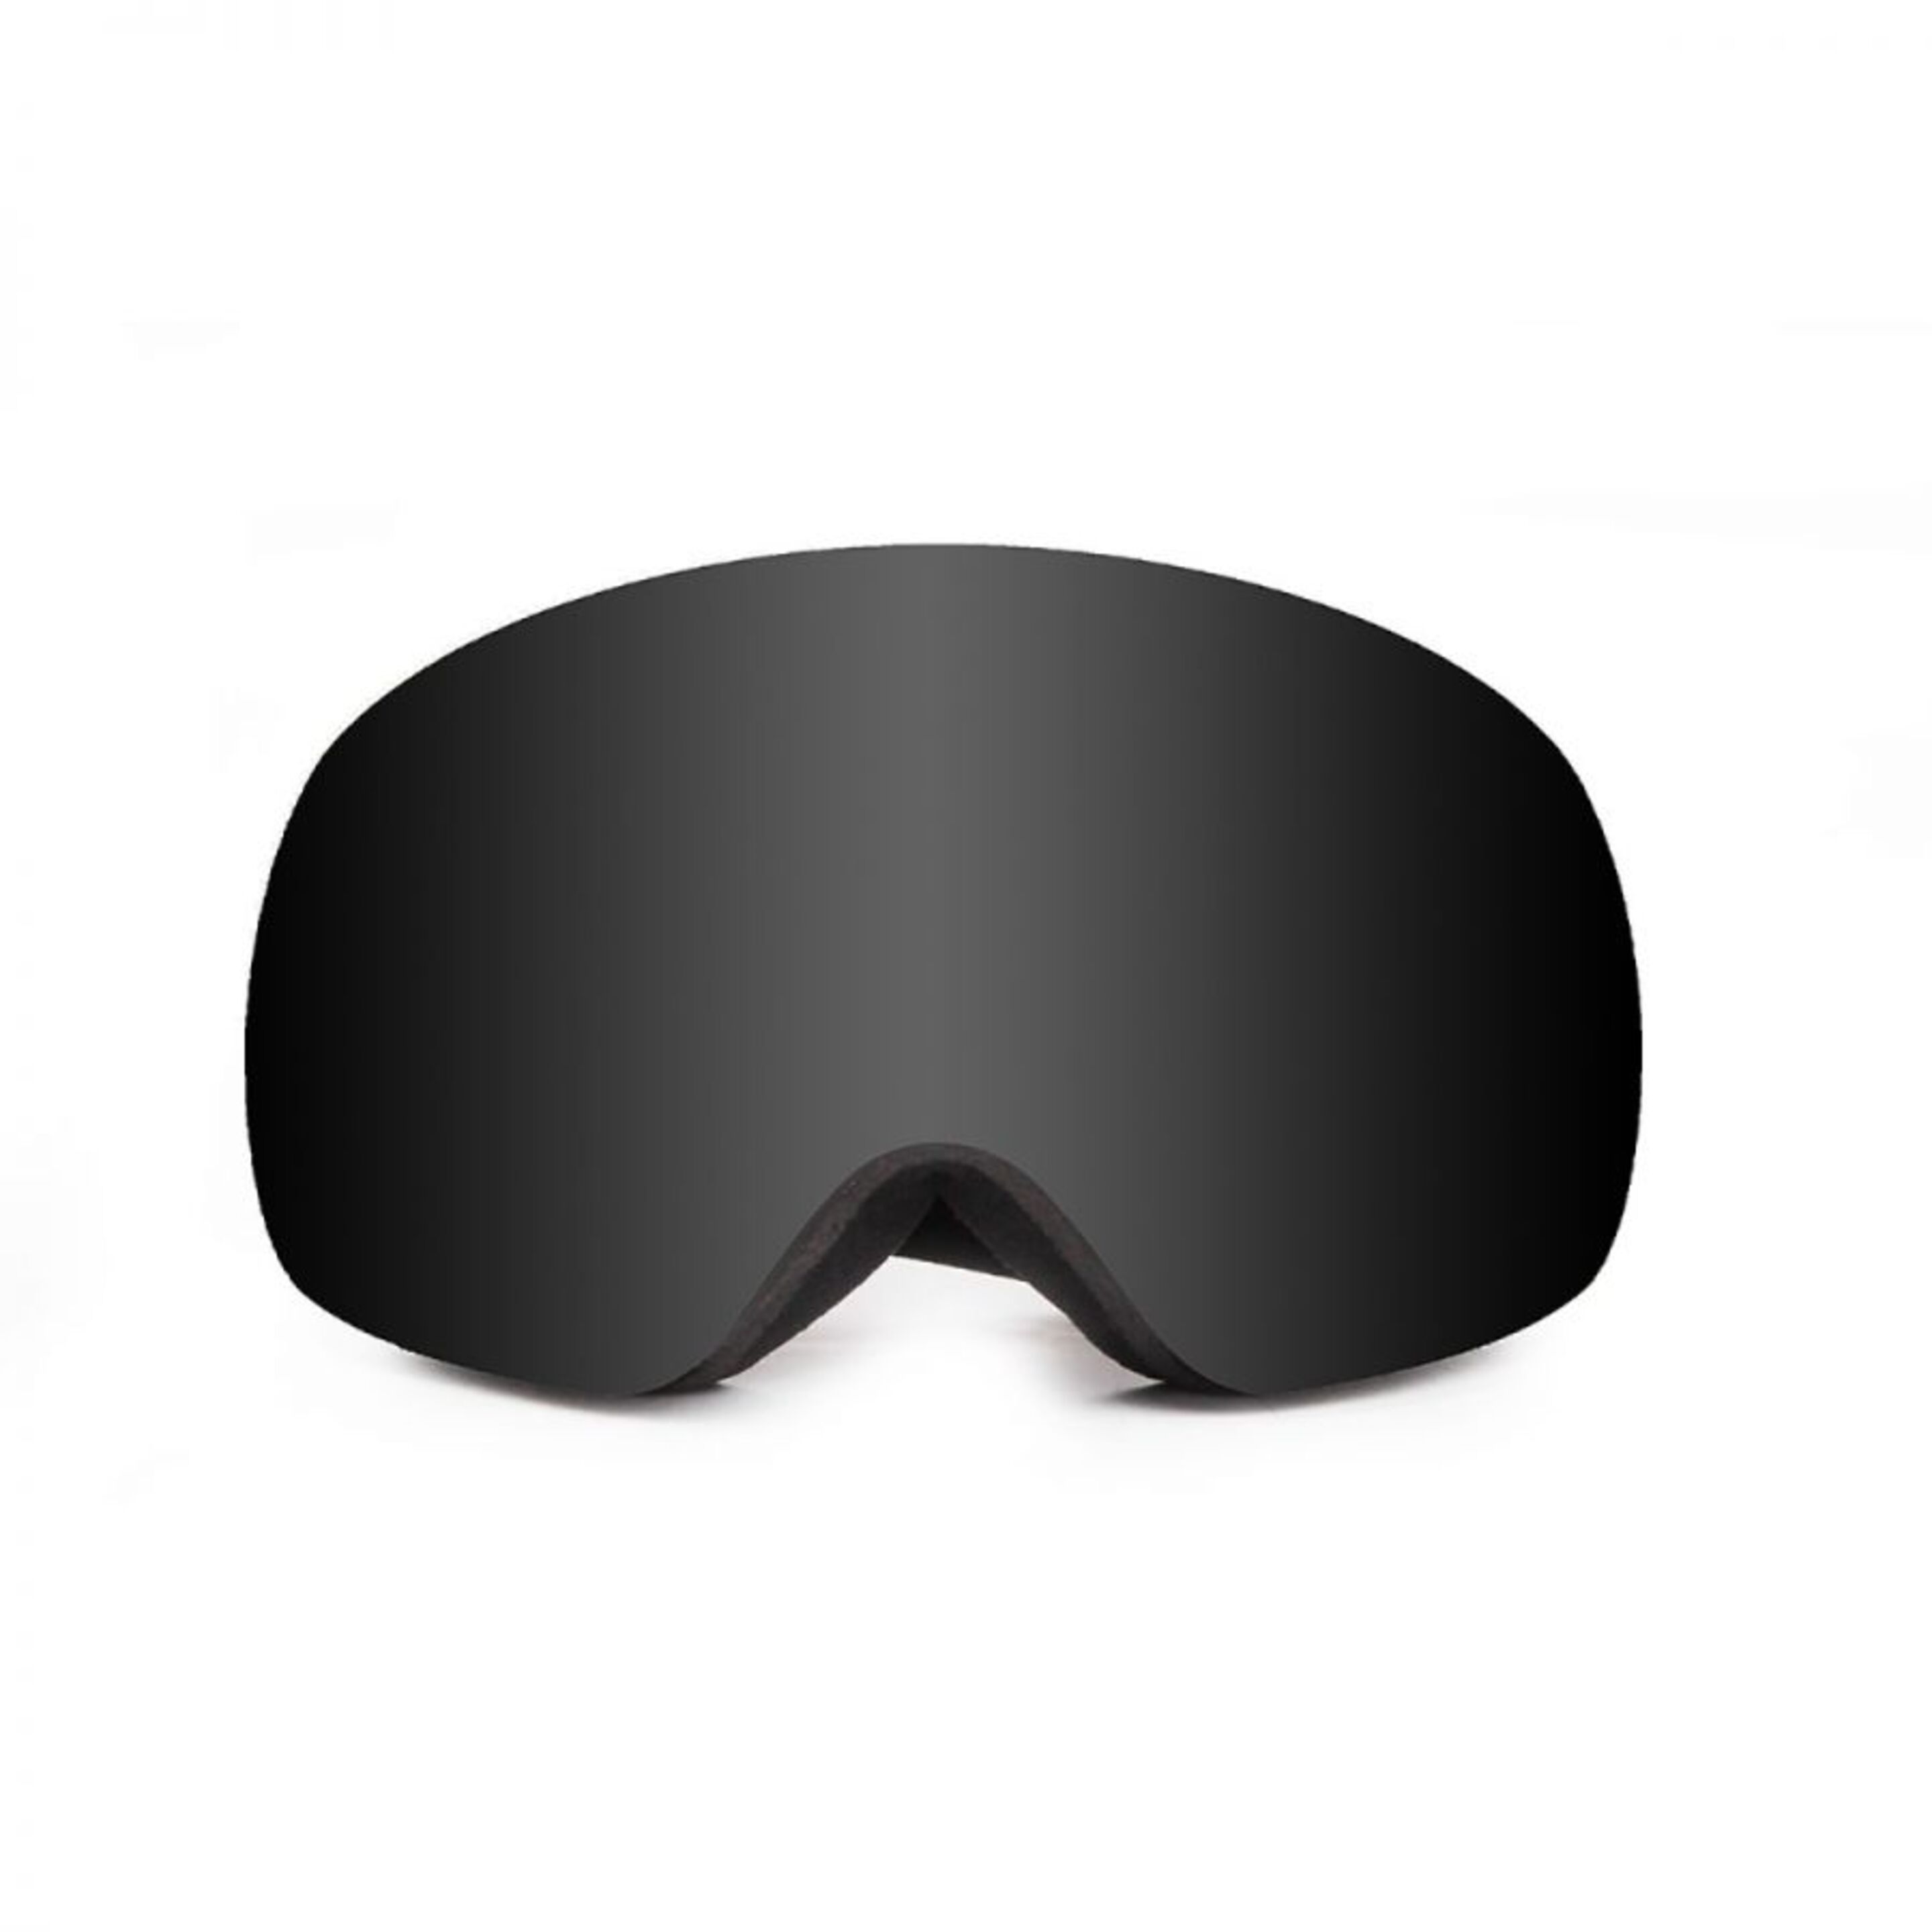 Mascara De Ski Ocean Sunglasses Arlberg - Negro - Gafas Esquí  MKP